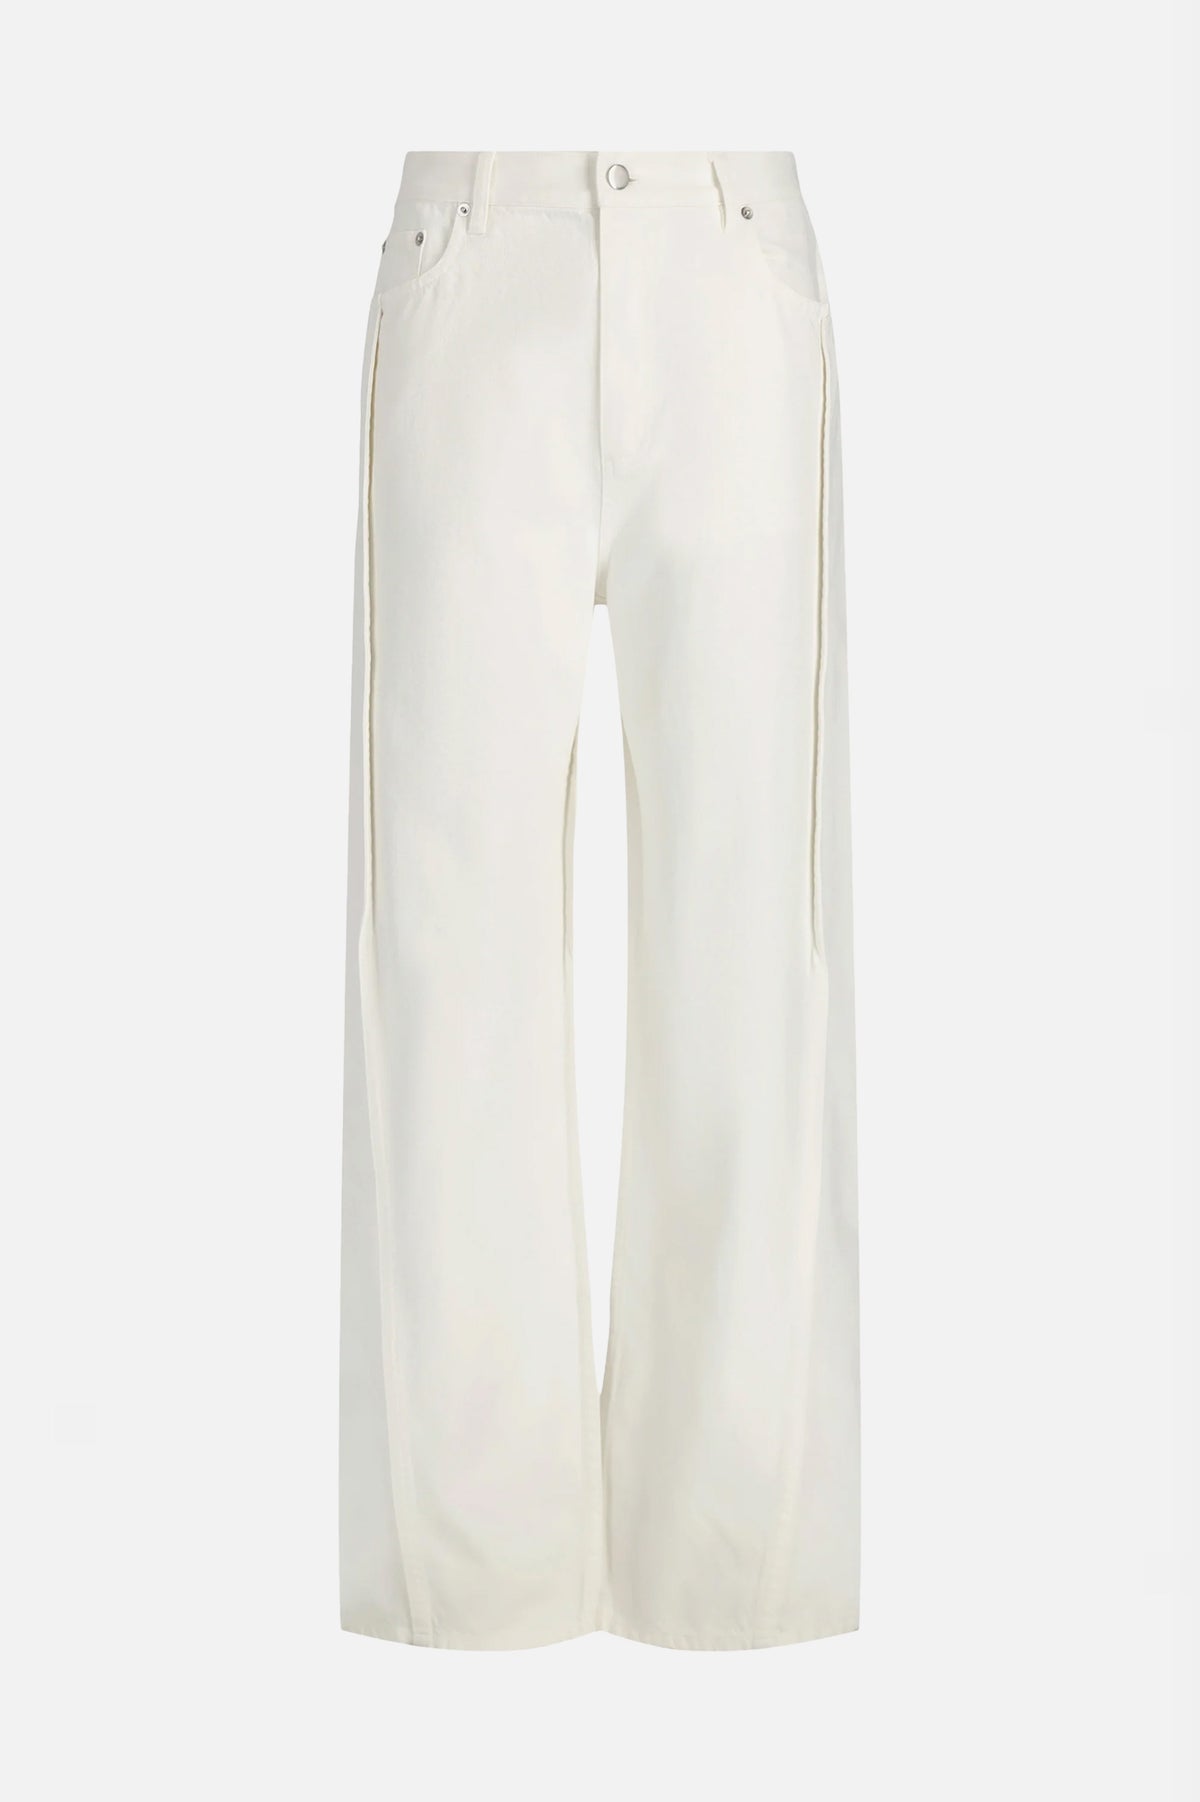 Spring Denim Tuck Jean in White - Regular